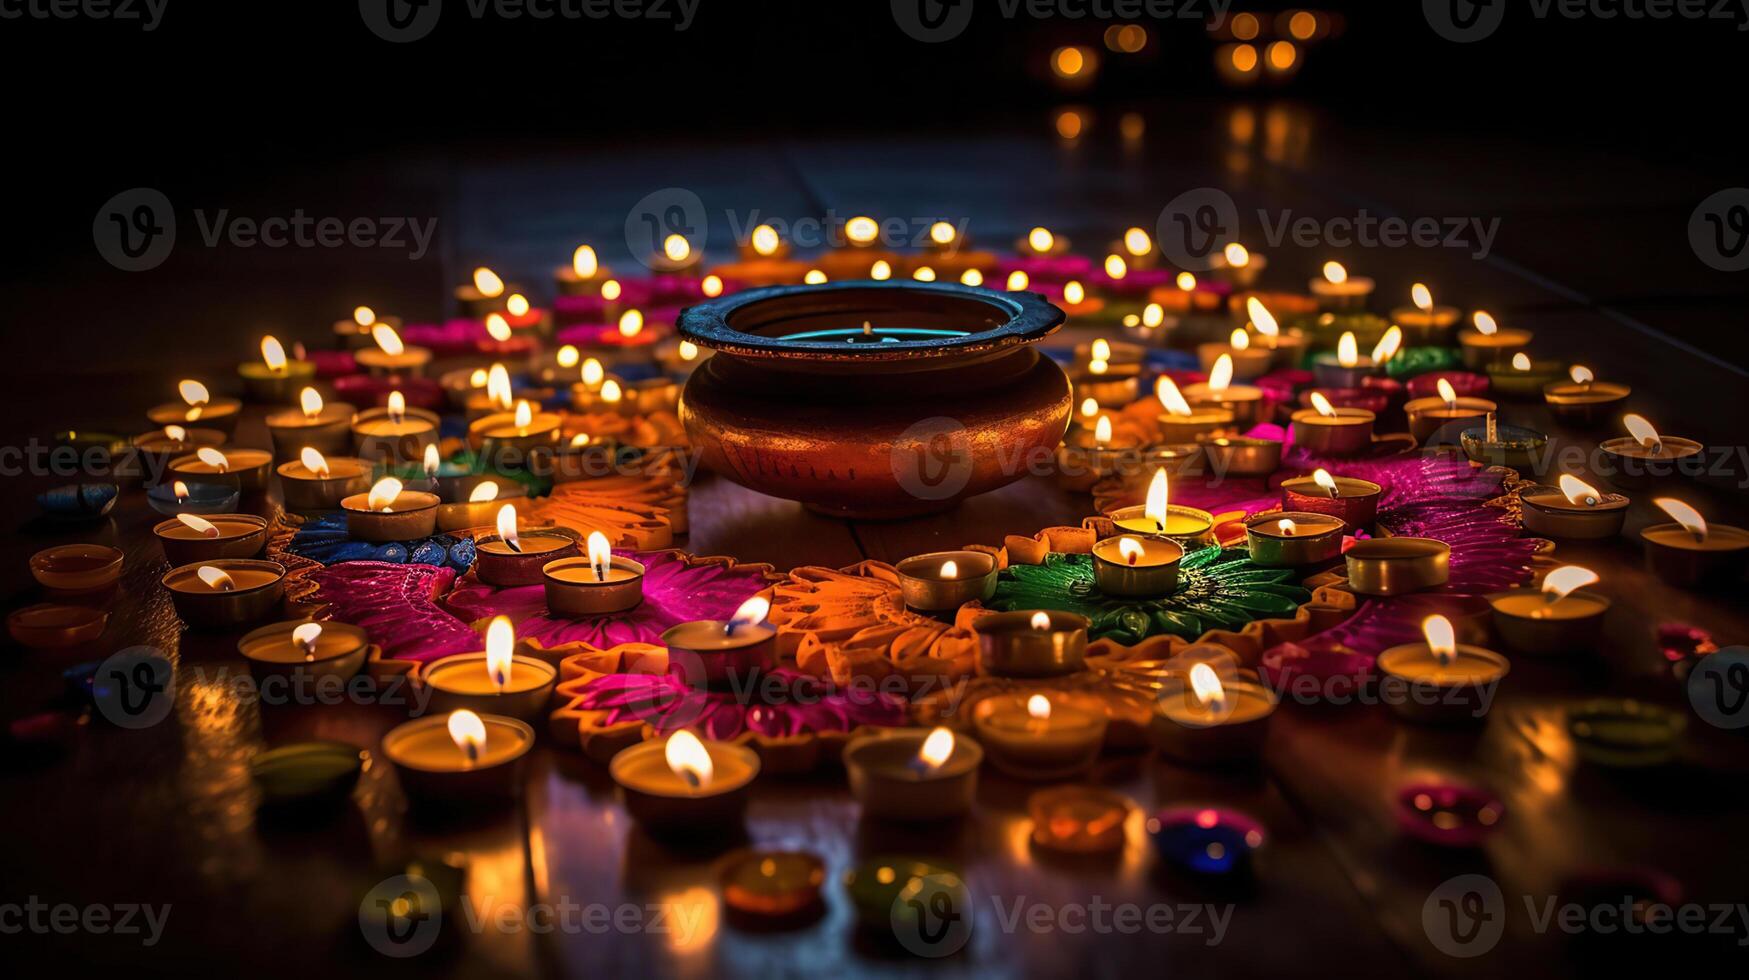 Diwali celebration - Diya oil lamps lit on colorful rangoli, photo